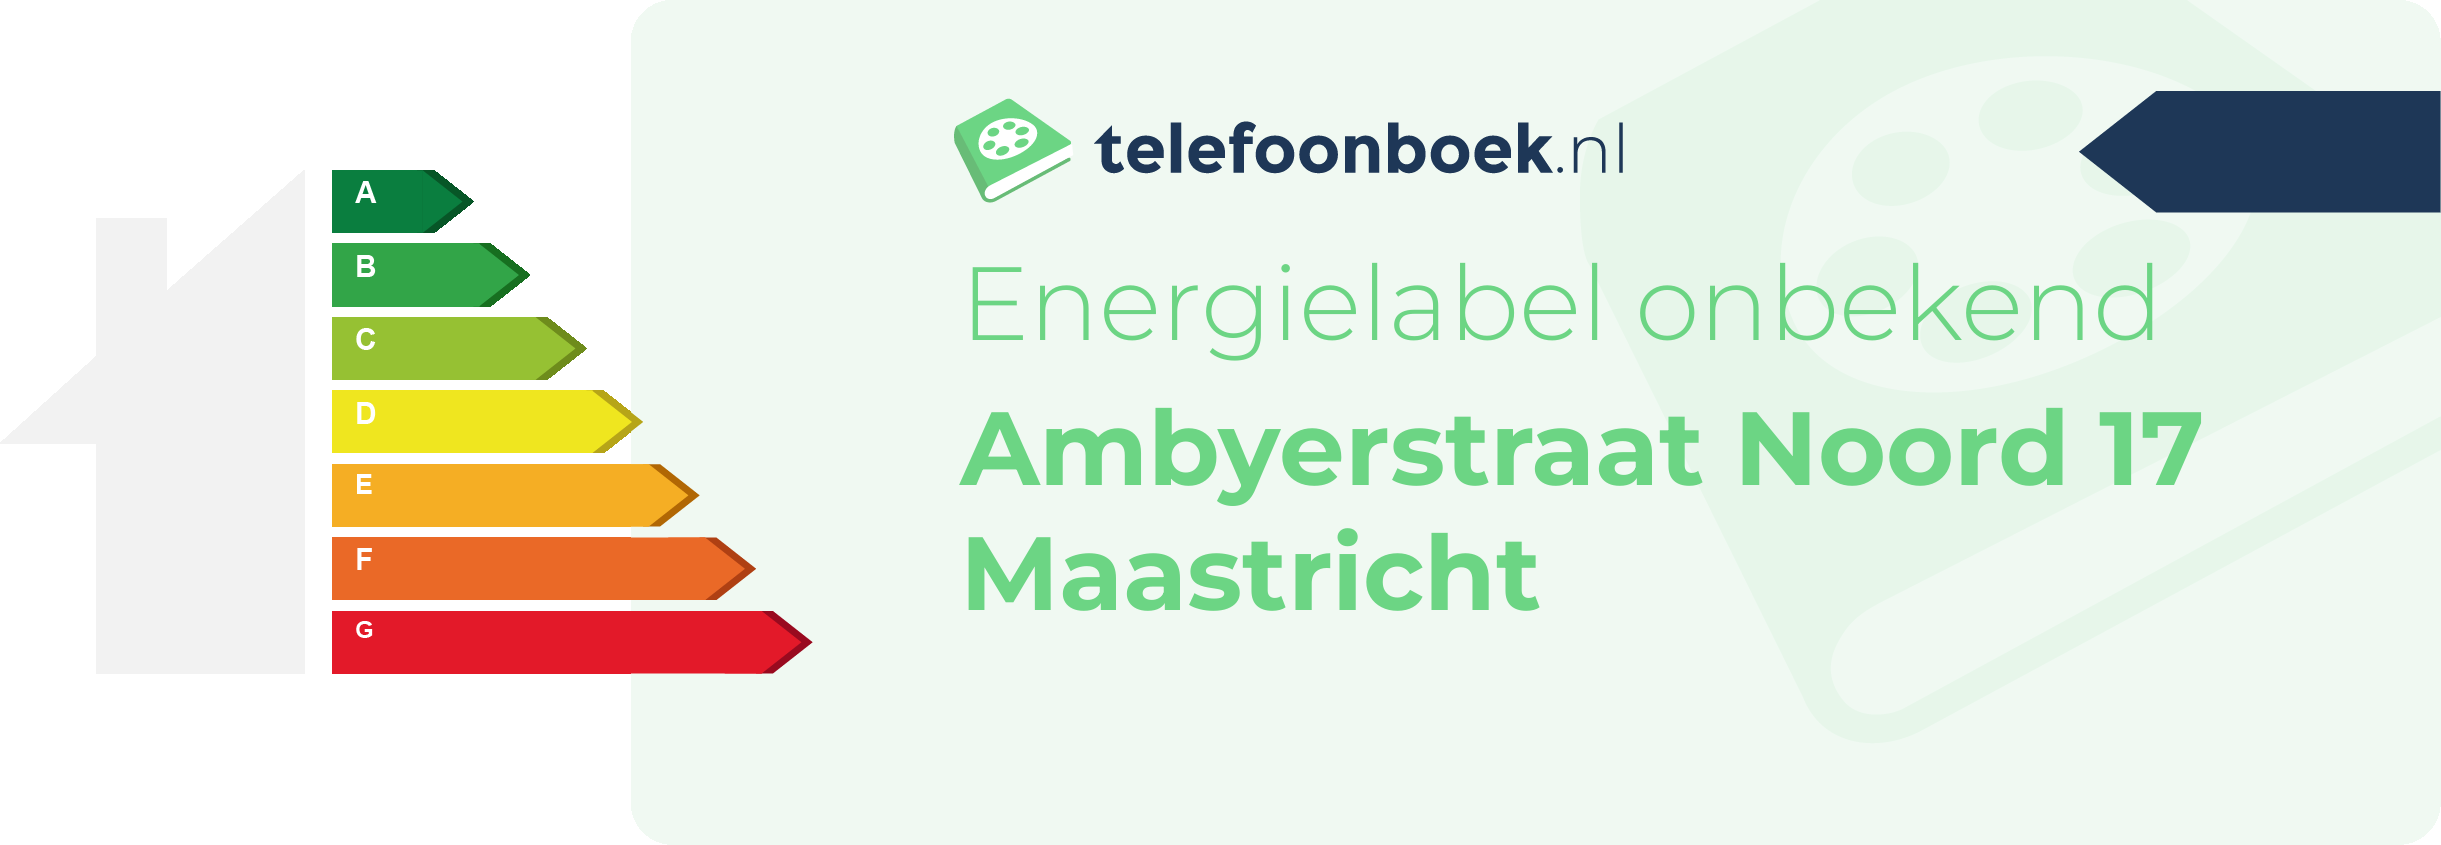 Energielabel Ambyerstraat Noord 17 Maastricht